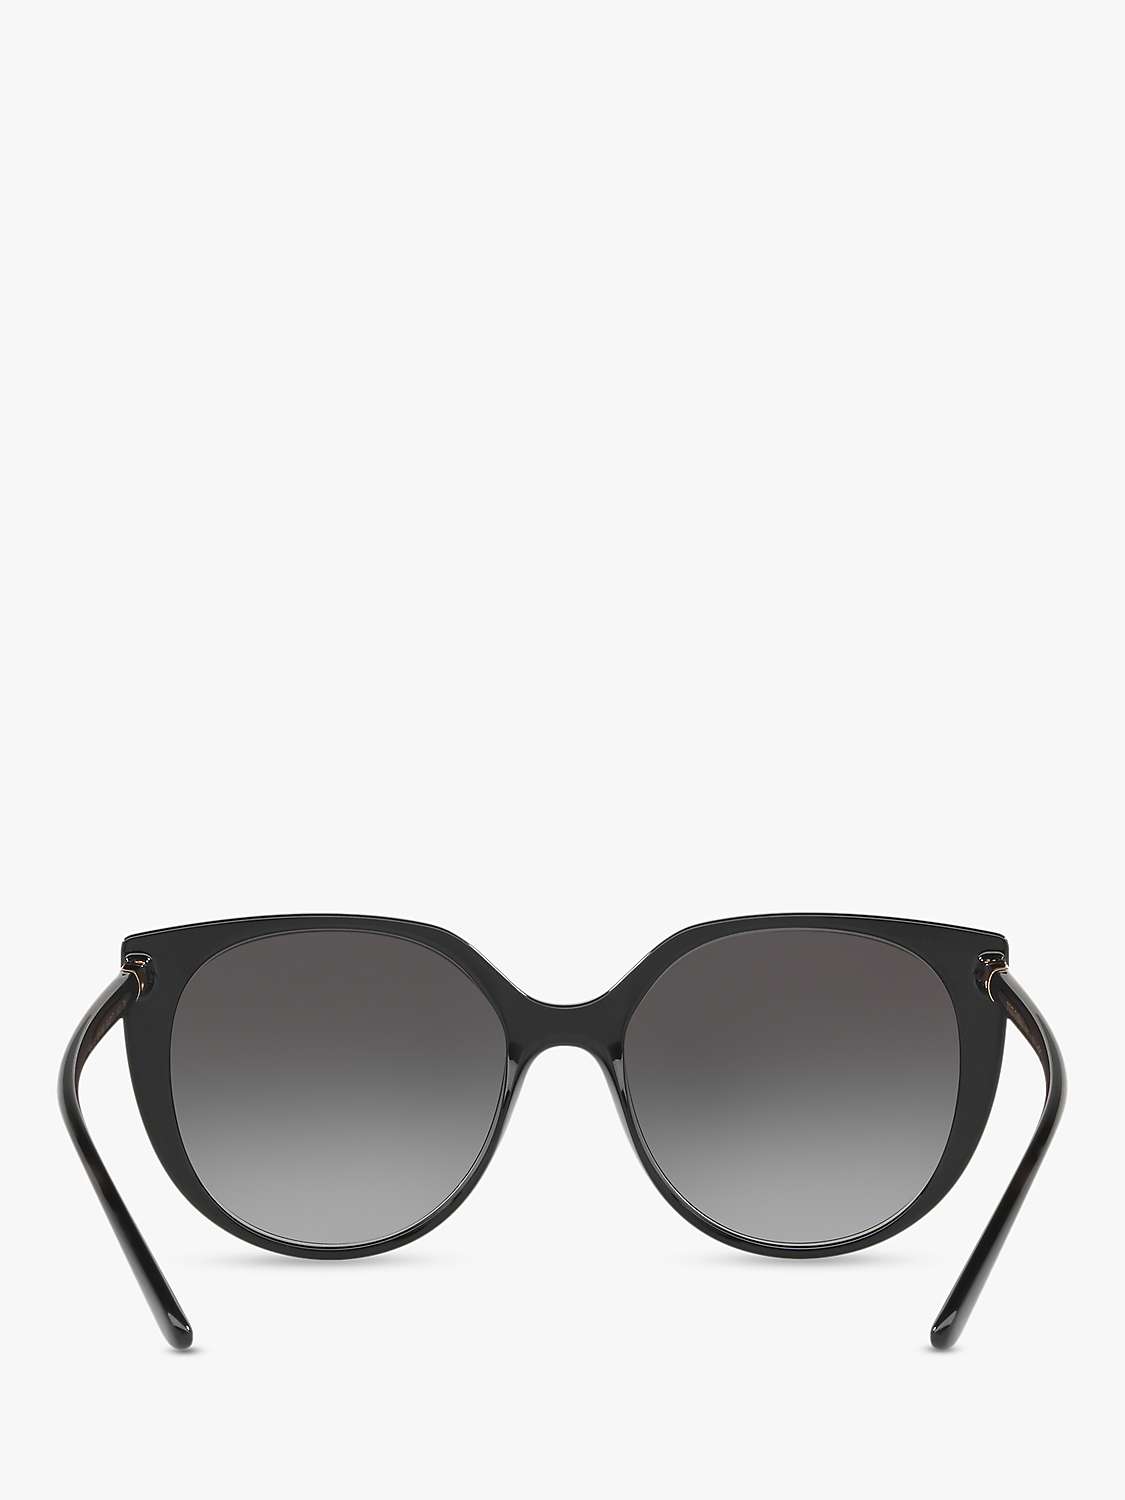 Buy Dolce & Gabbana DG6119 Women's Oval Sunglasses, Matte Black/Grey Gradient Online at johnlewis.com